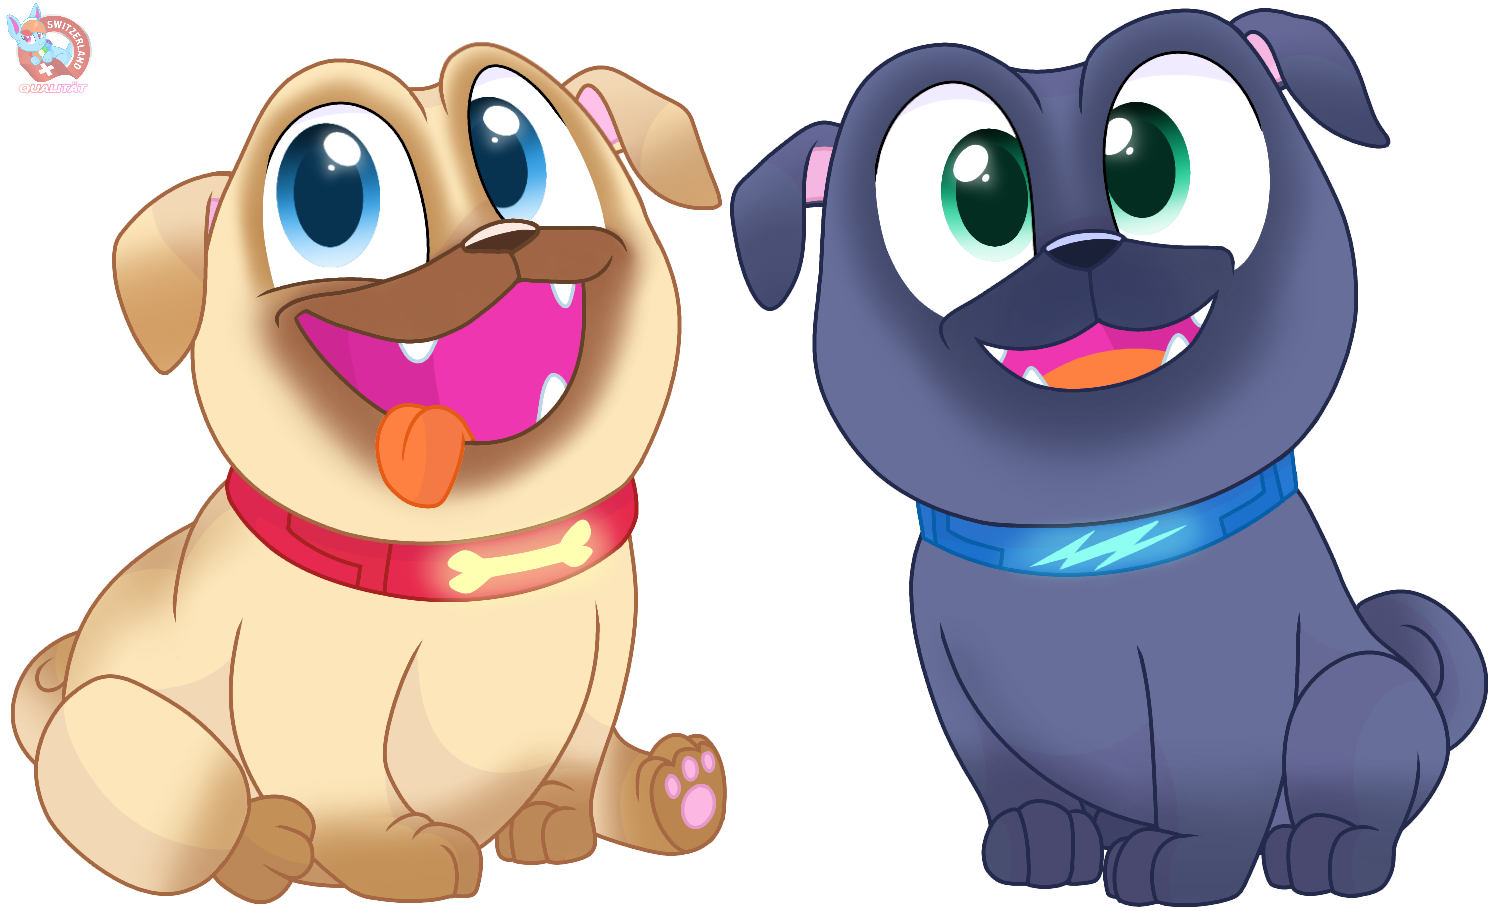 Puppy Dog Pals Bingo and Rolly vector by RainbowEevee-DA on DeviantArt